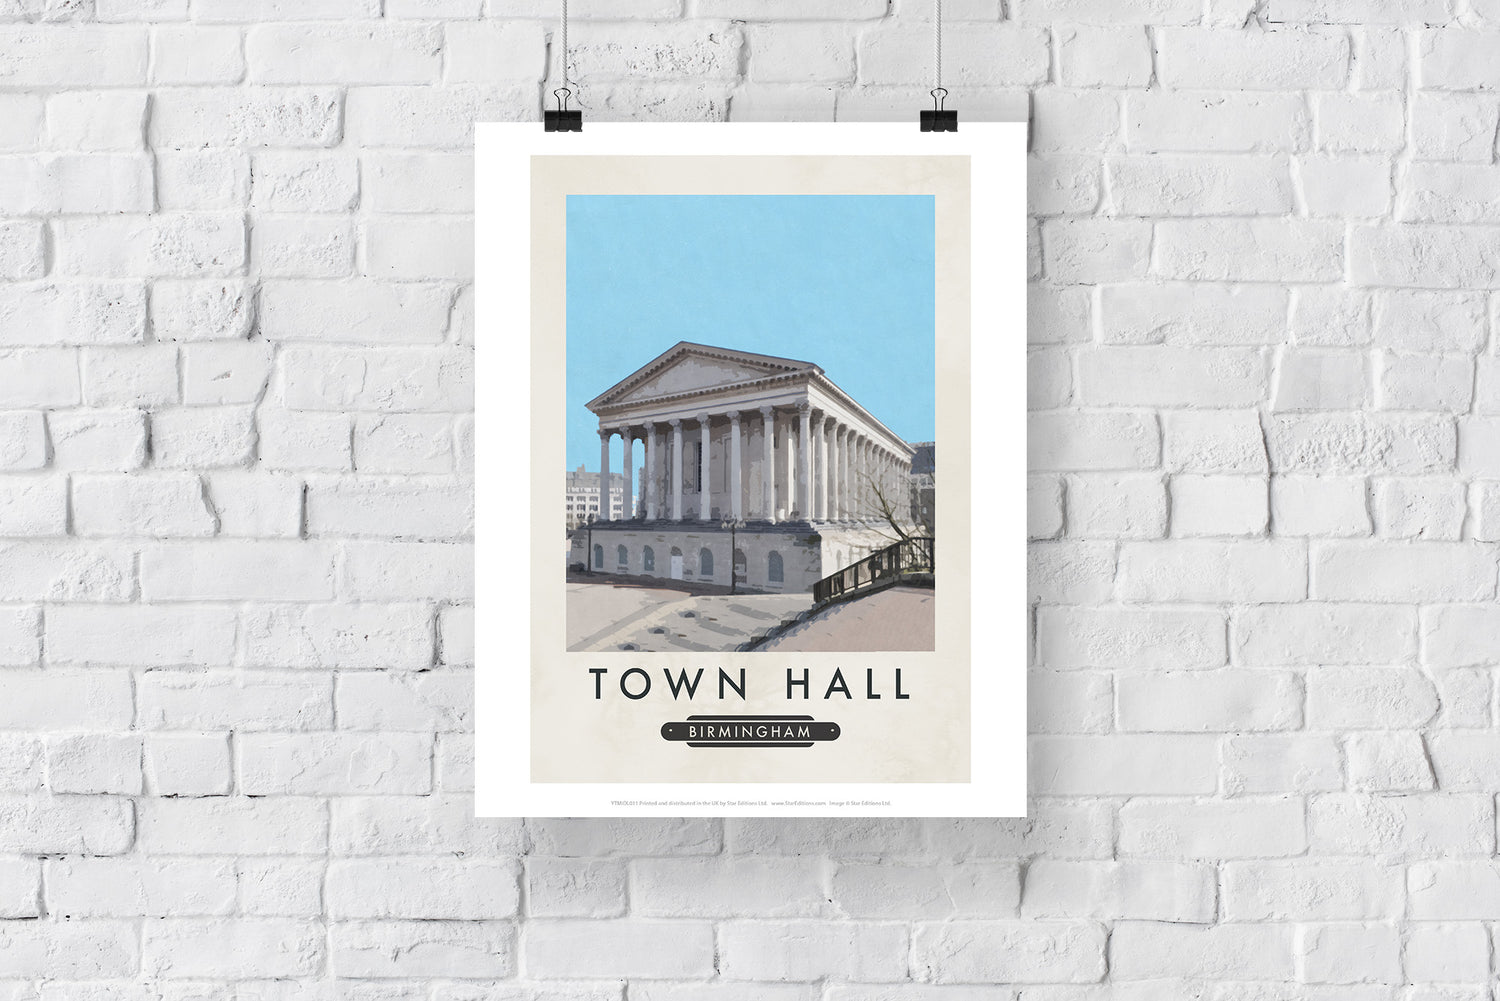 The Town Hall, Birmingham - Art Print